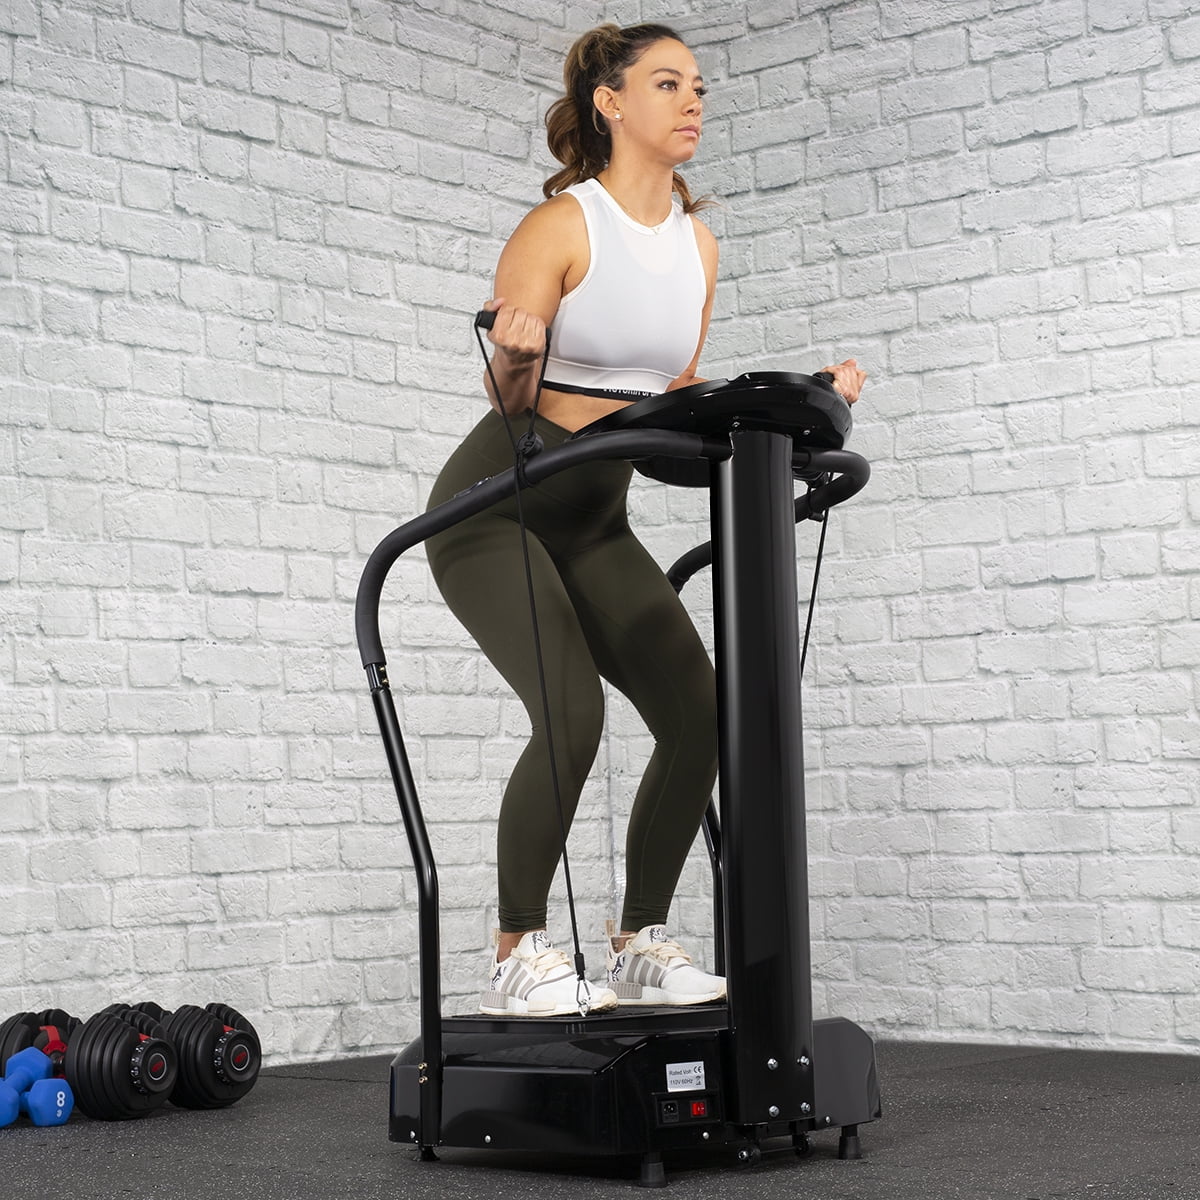 Vibration Plate Crazy Fitness Platform Body Shaker Machine Exercise Home Gym 